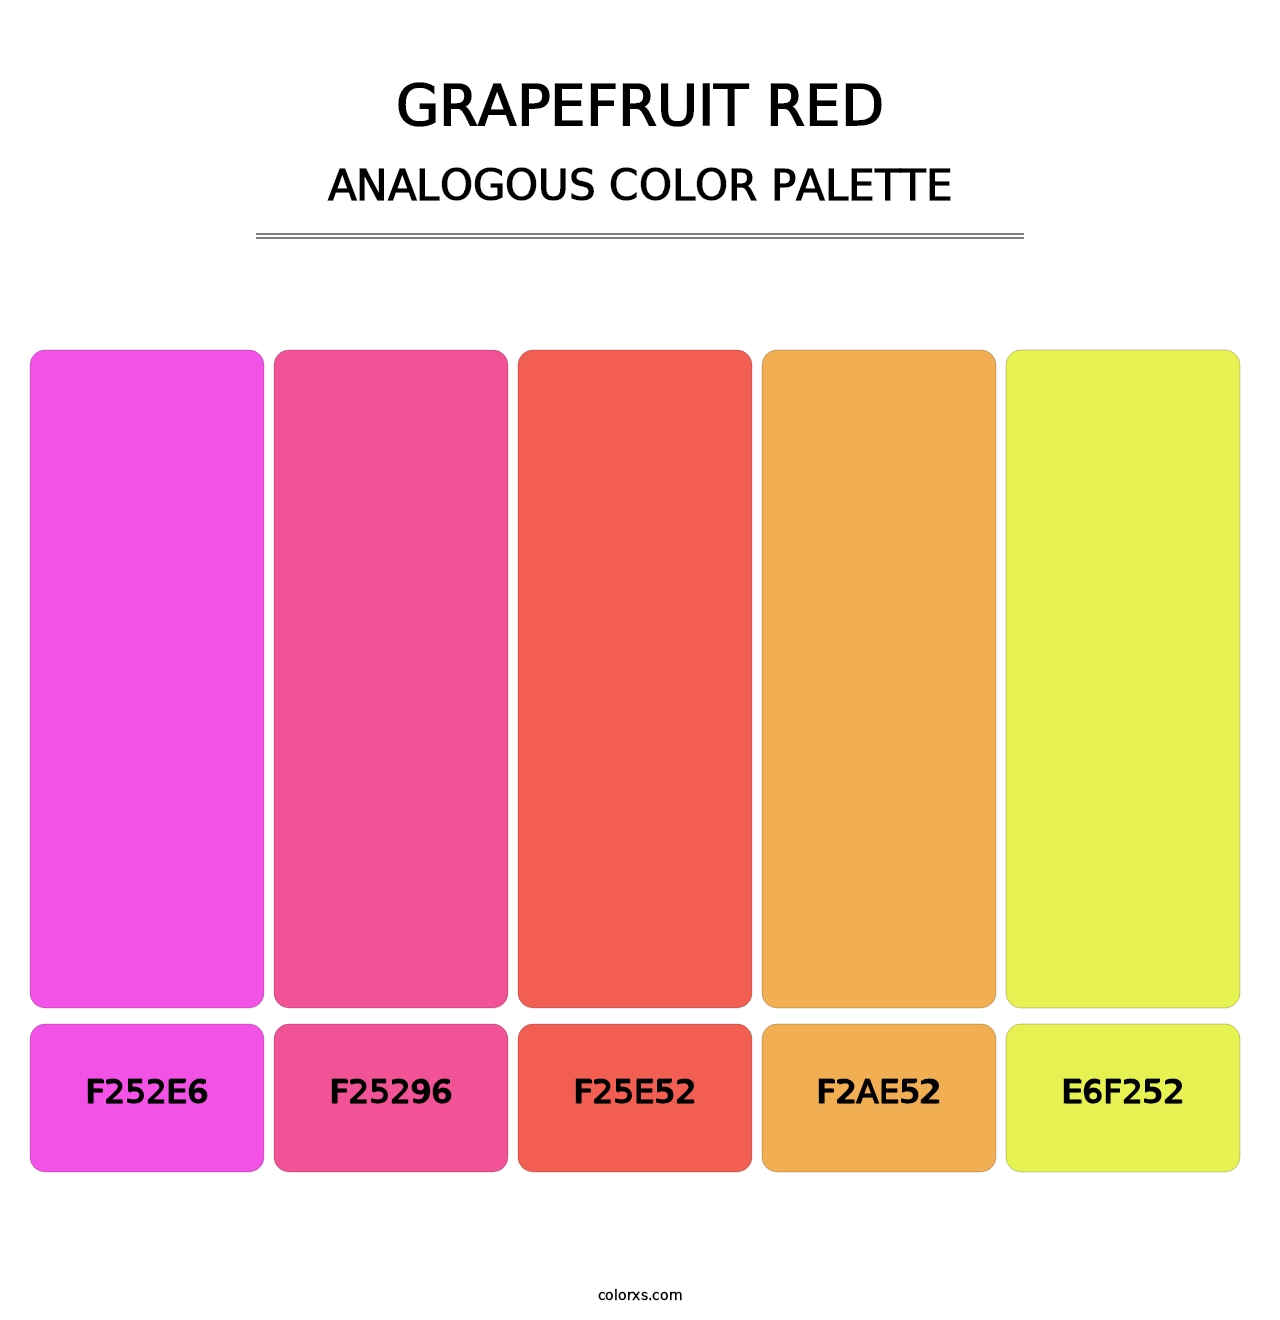 Grapefruit Red - Analogous Color Palette